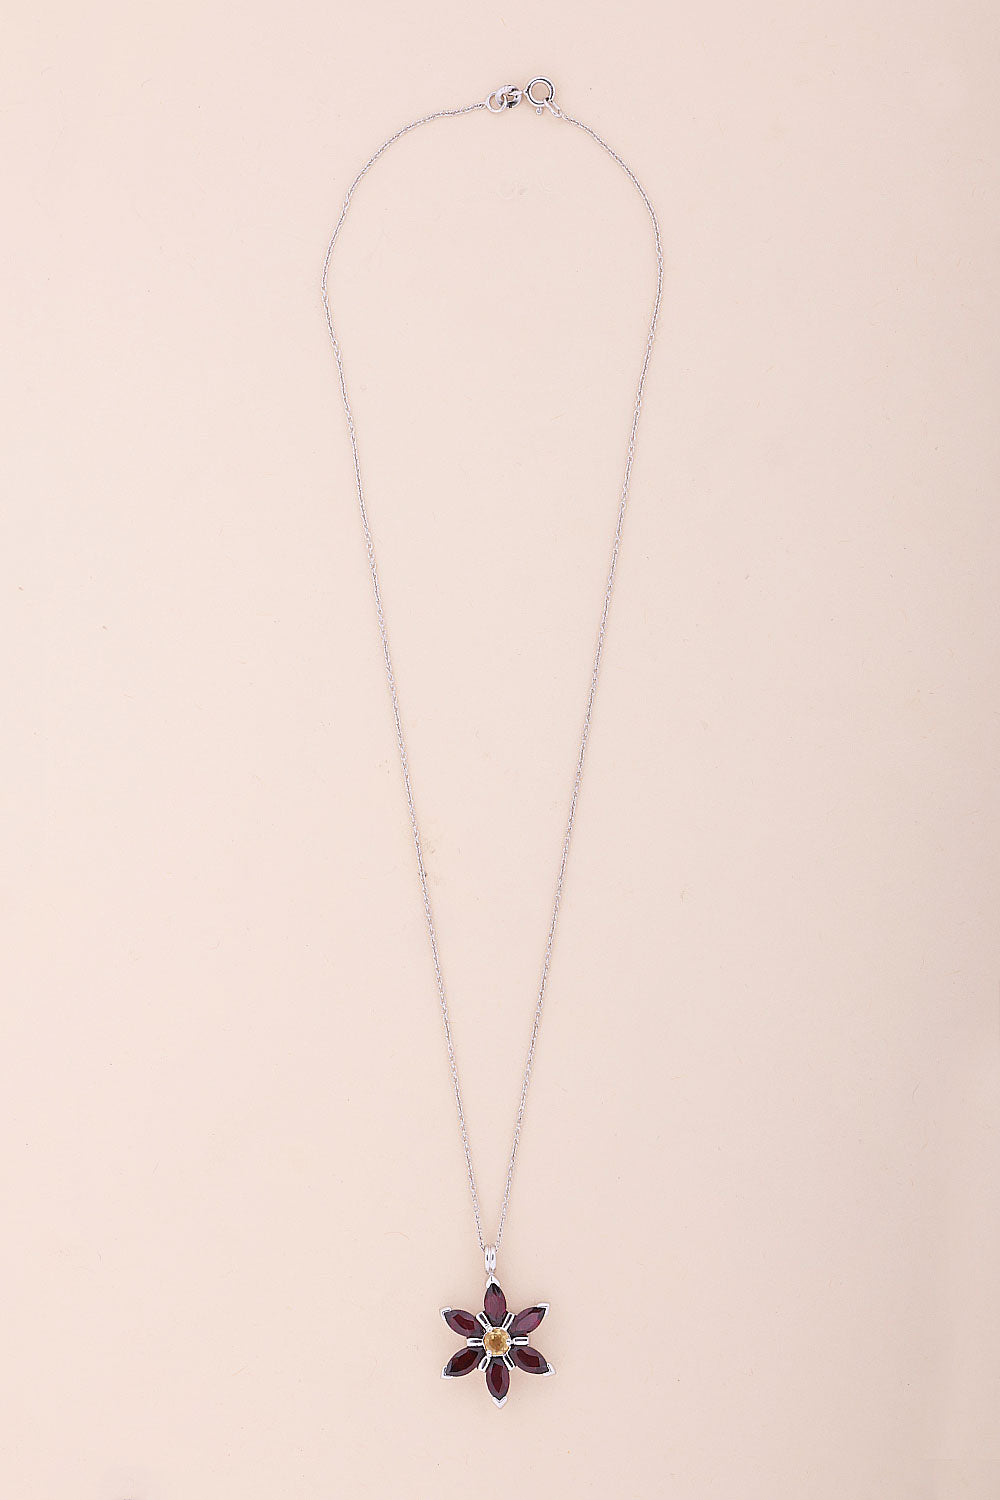 Rhodolite And Citrine Sterling Silver Necklace Pendant Chain  - Avishya